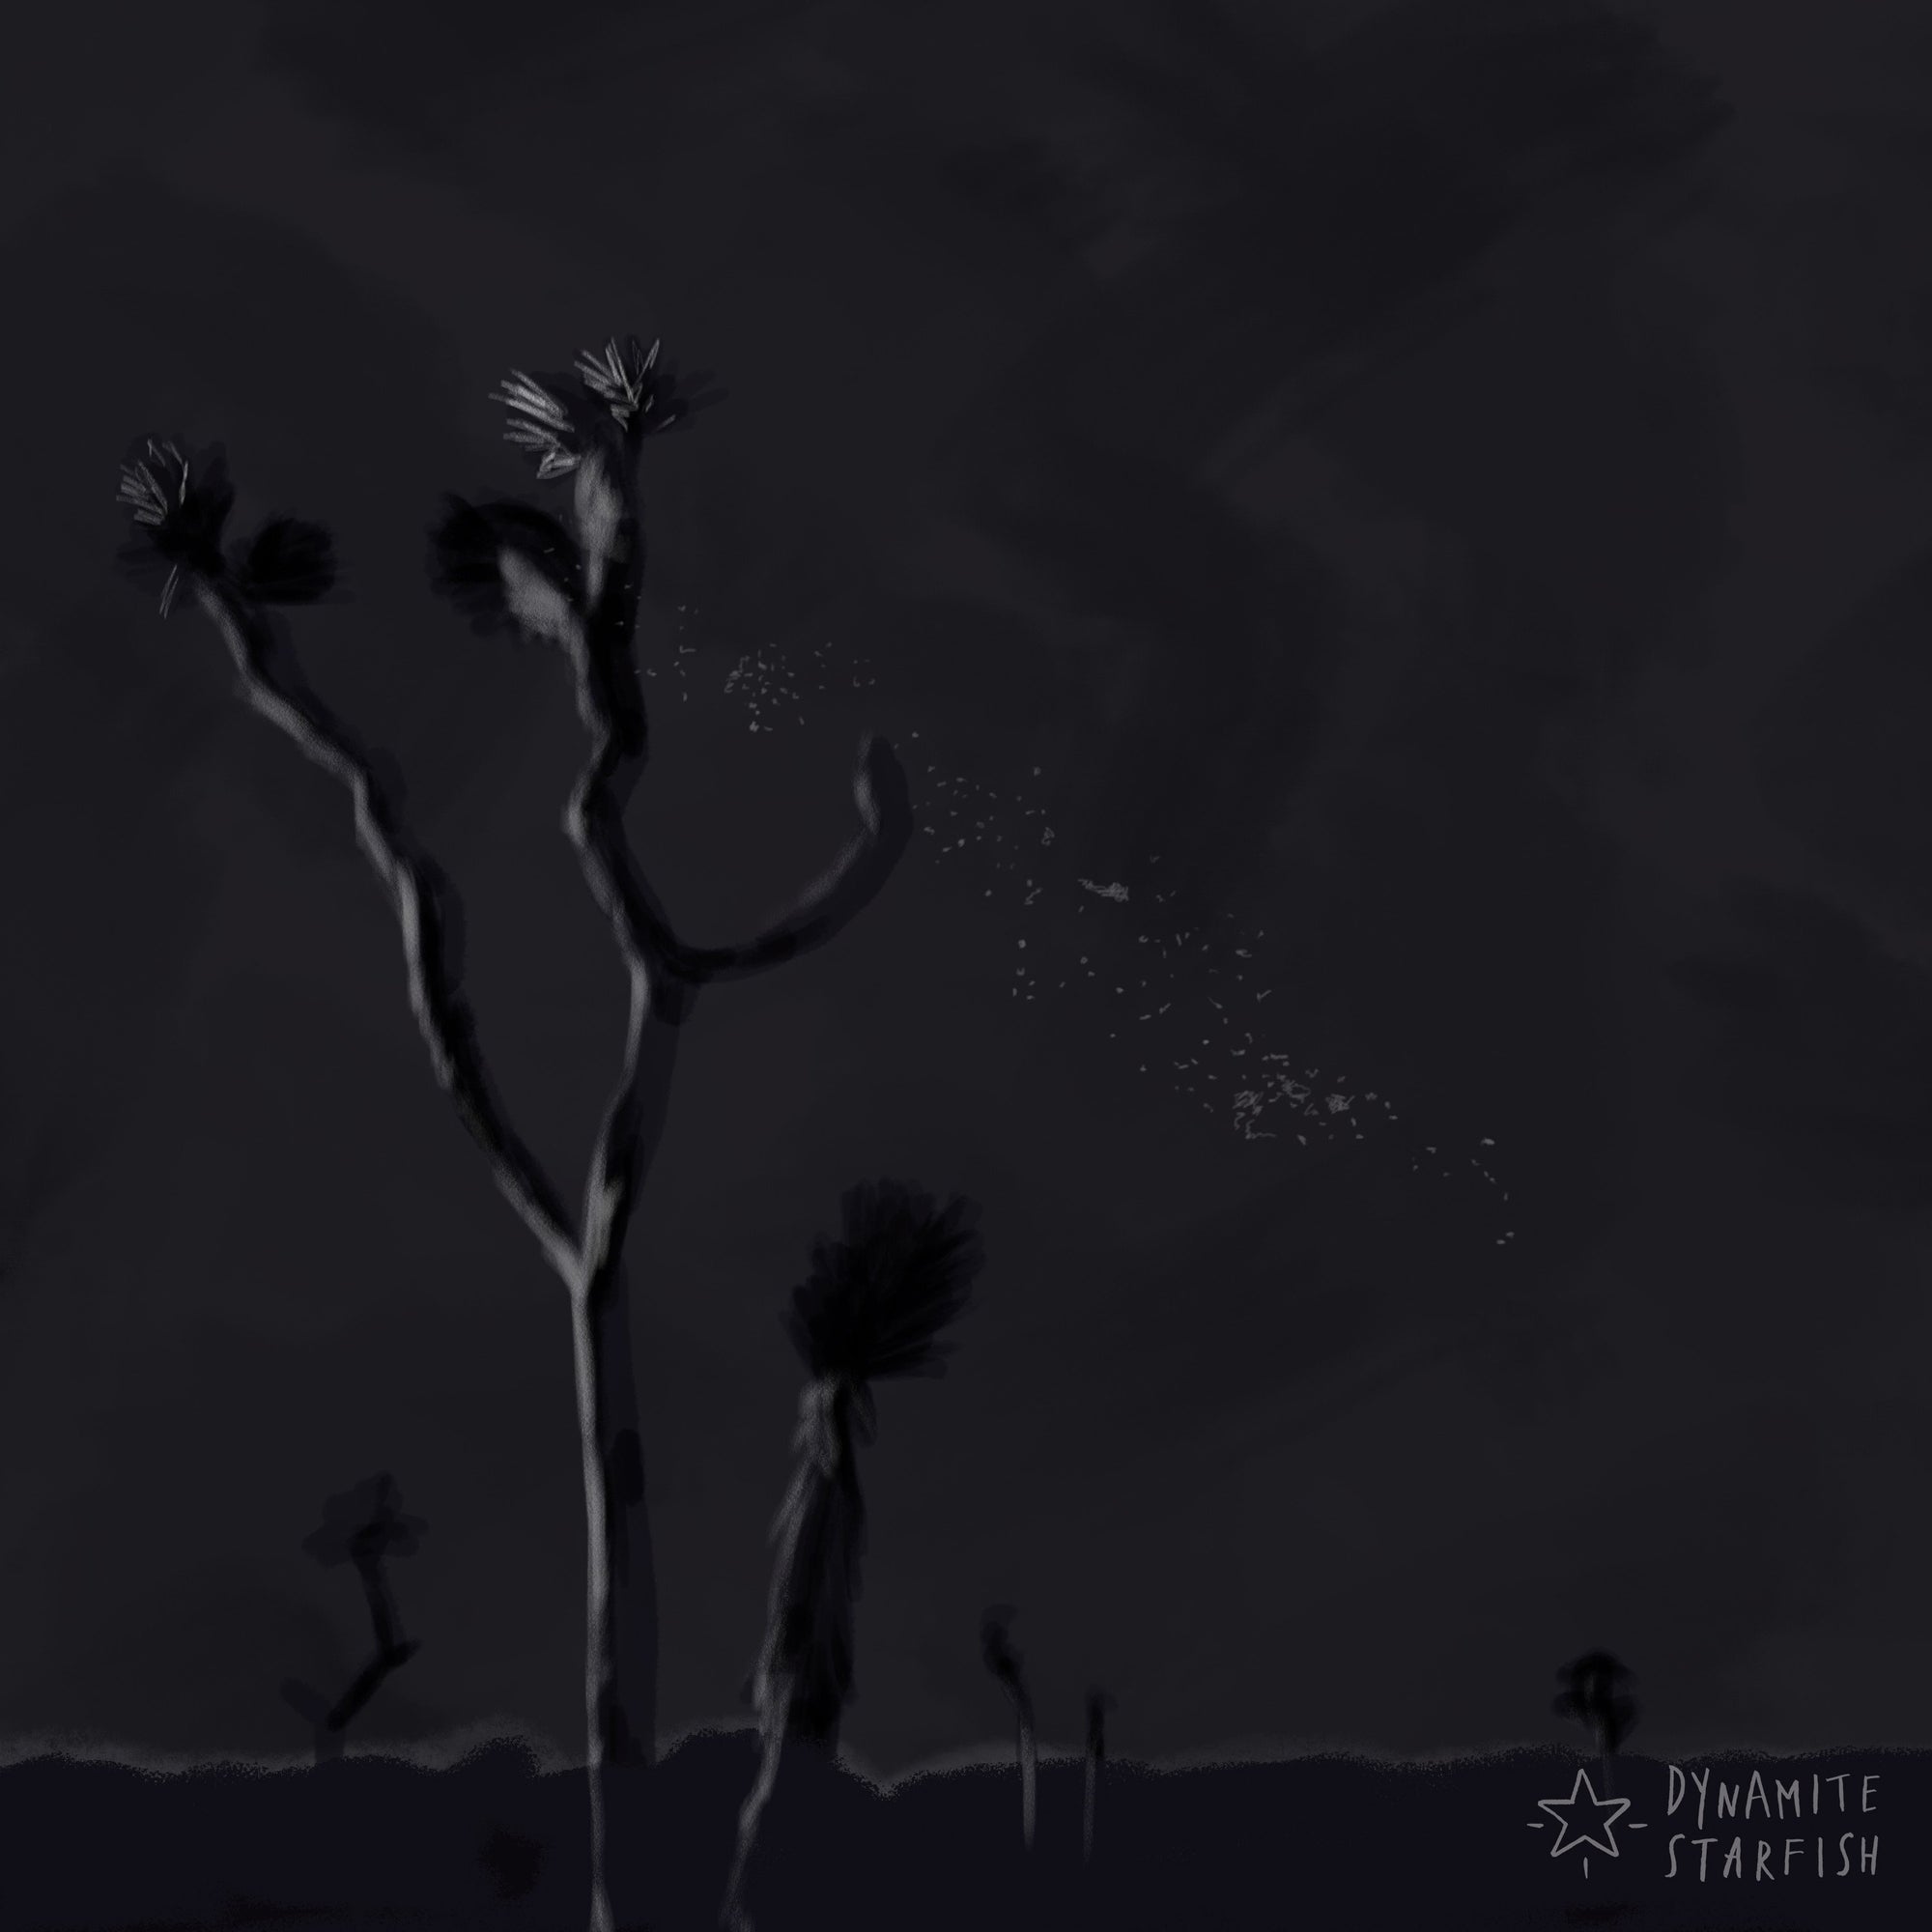 100 Drawings about Climbing — The Blackest Night in Joshua Tree - Dynamite Starfish